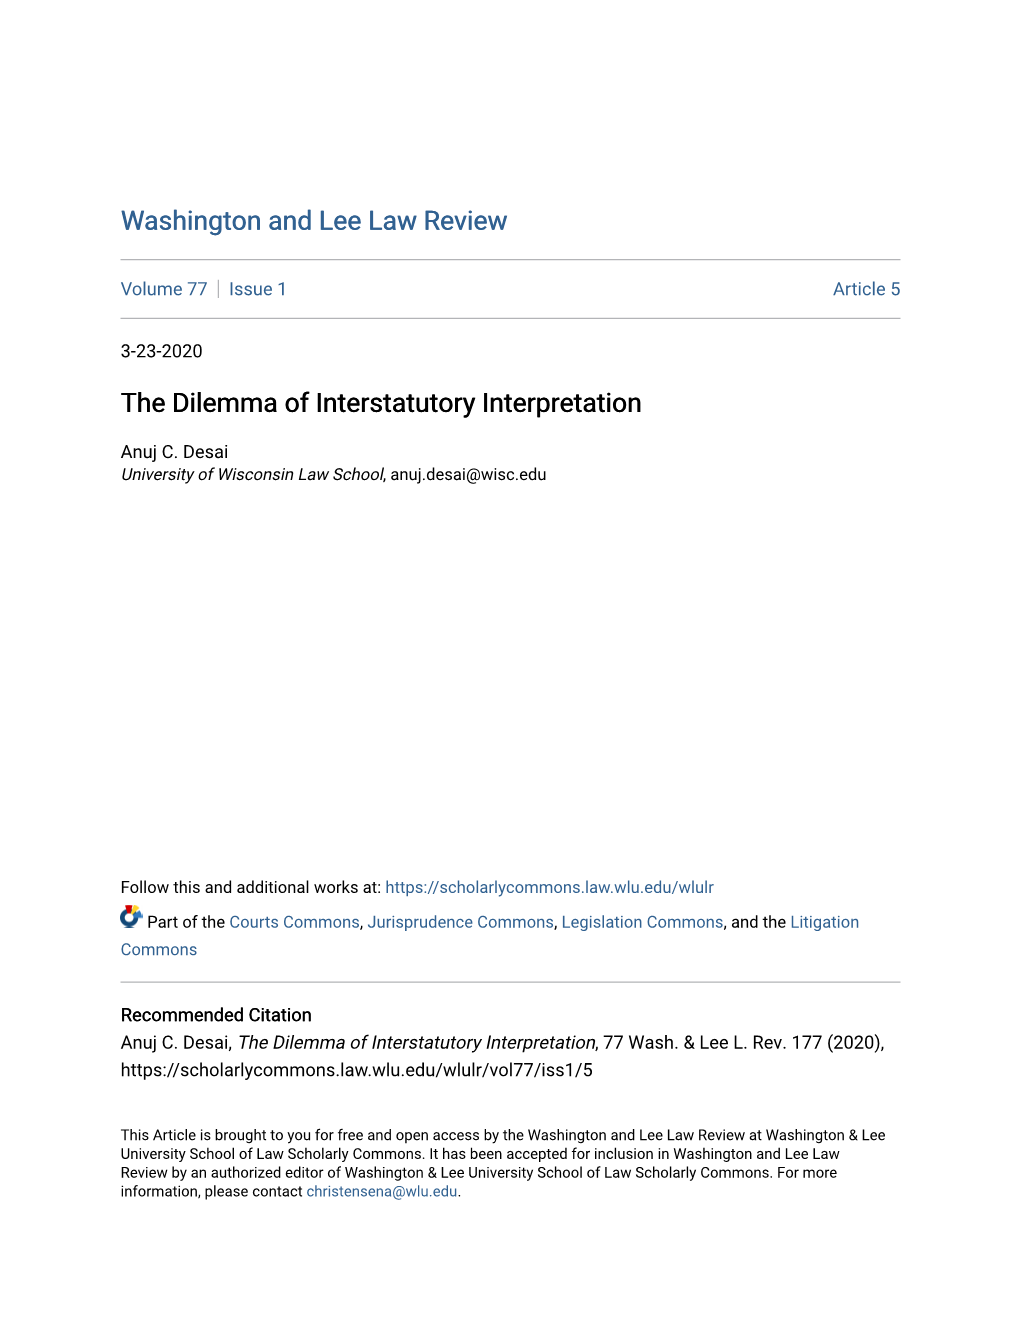 The Dilemma of Interstatutory Interpretation